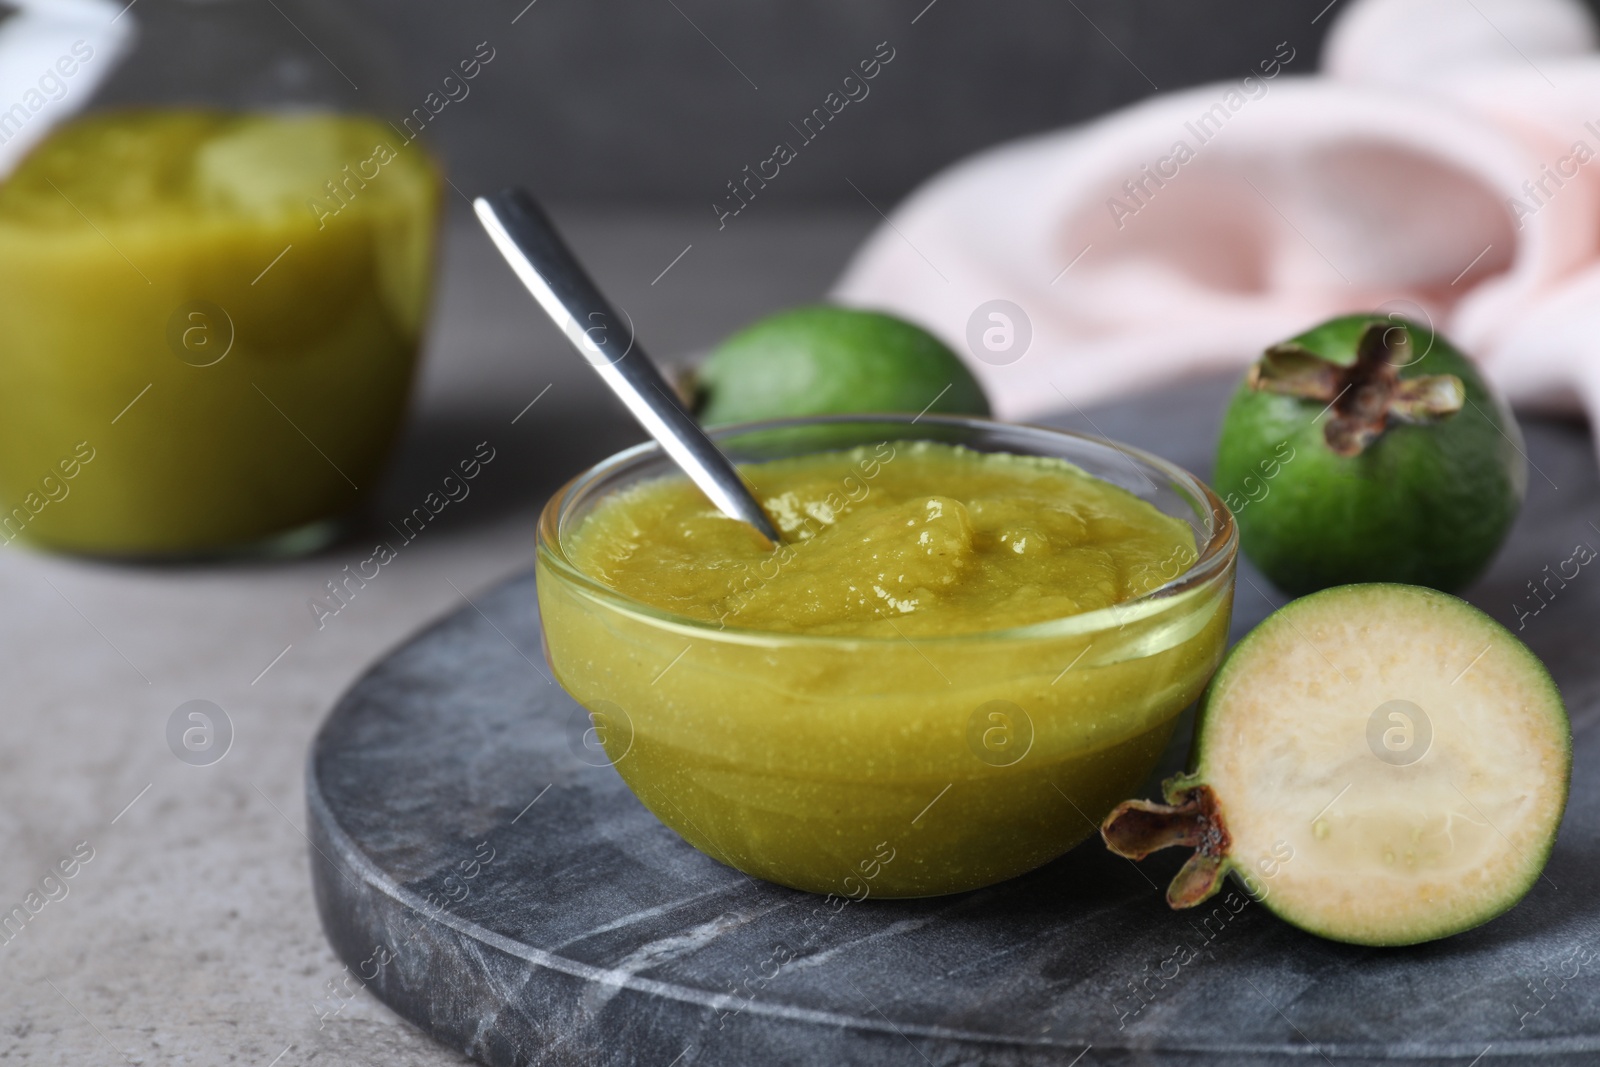 Photo of Feijoa jam and fresh fruits on grey table, closeup